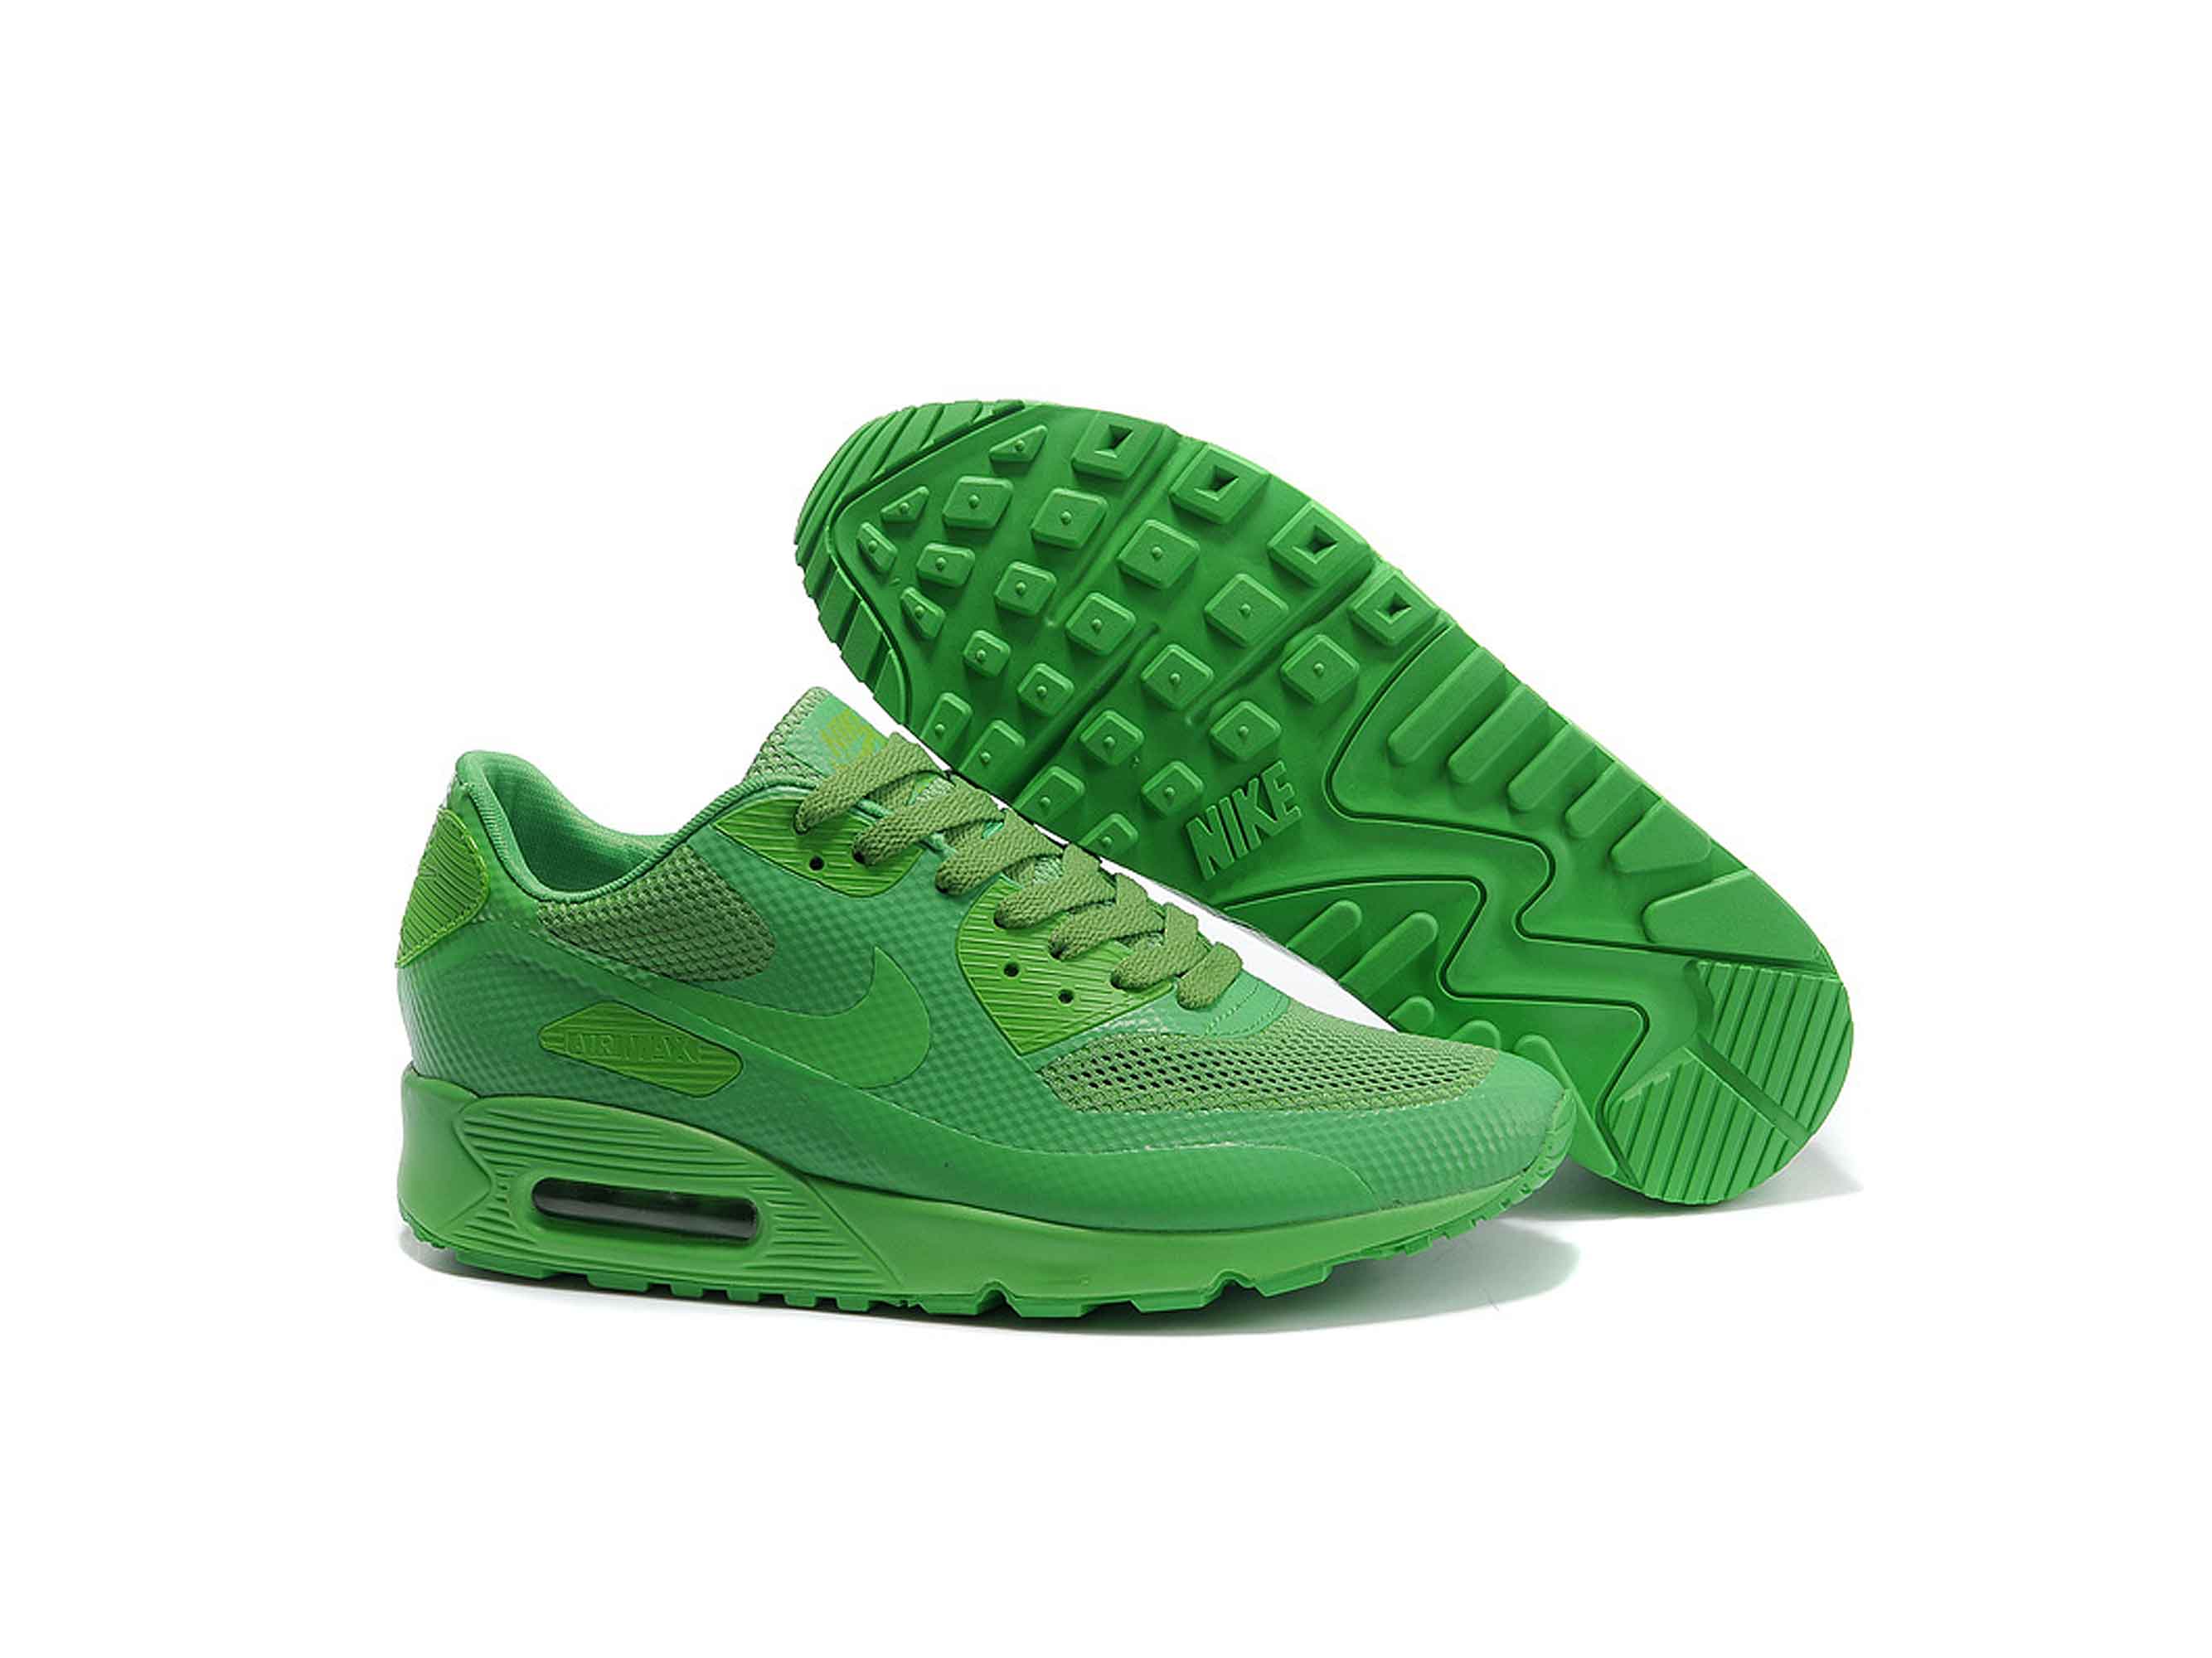 Кроссовки nike green. Nike Air Max 90 Hyperfuse Green. Nike-Air-Max-90-Hyperfuse-2012-Green. Найк АИР Макс 90 зеленые. Air Max Hyperfuse 90 Green.